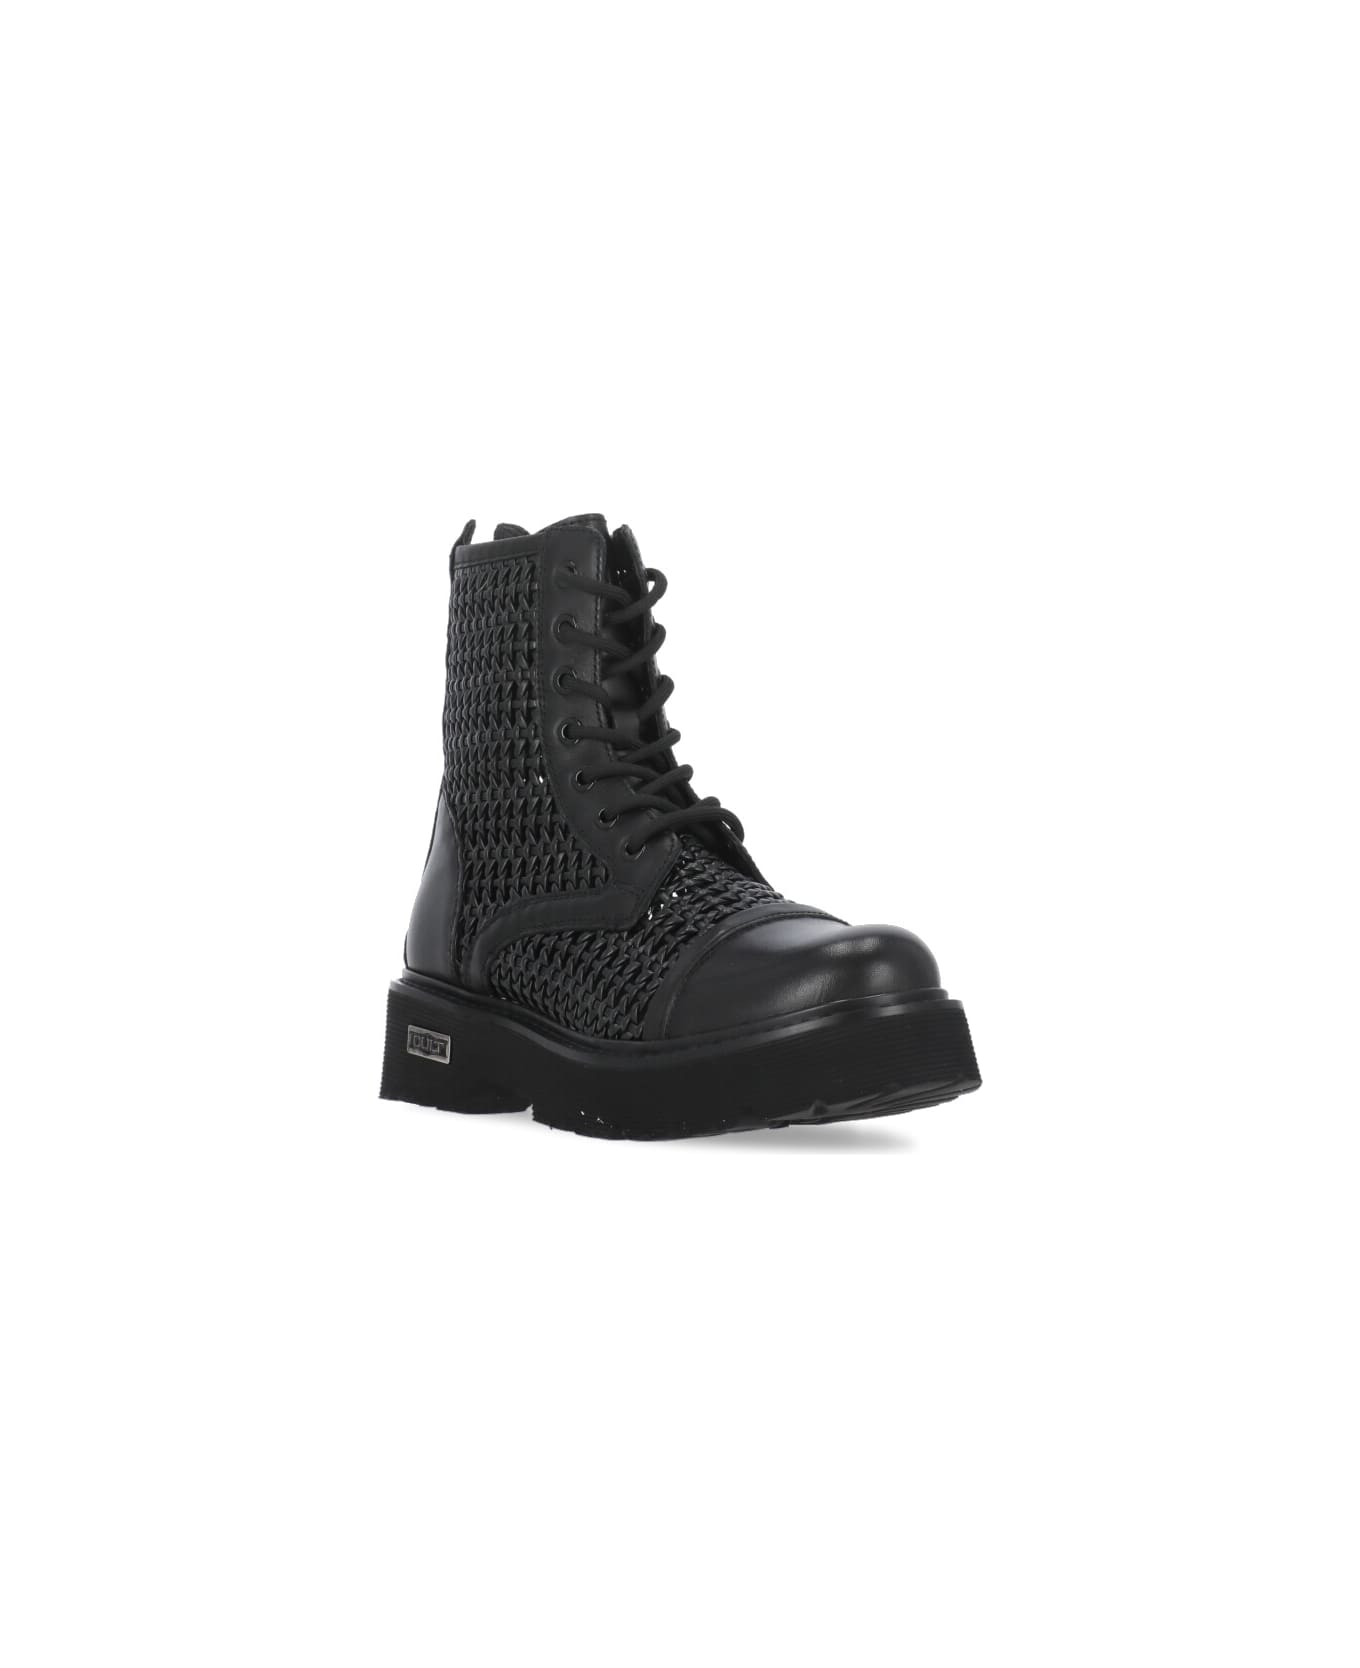 Cult Slash 4218 Boots - Black ブーツ